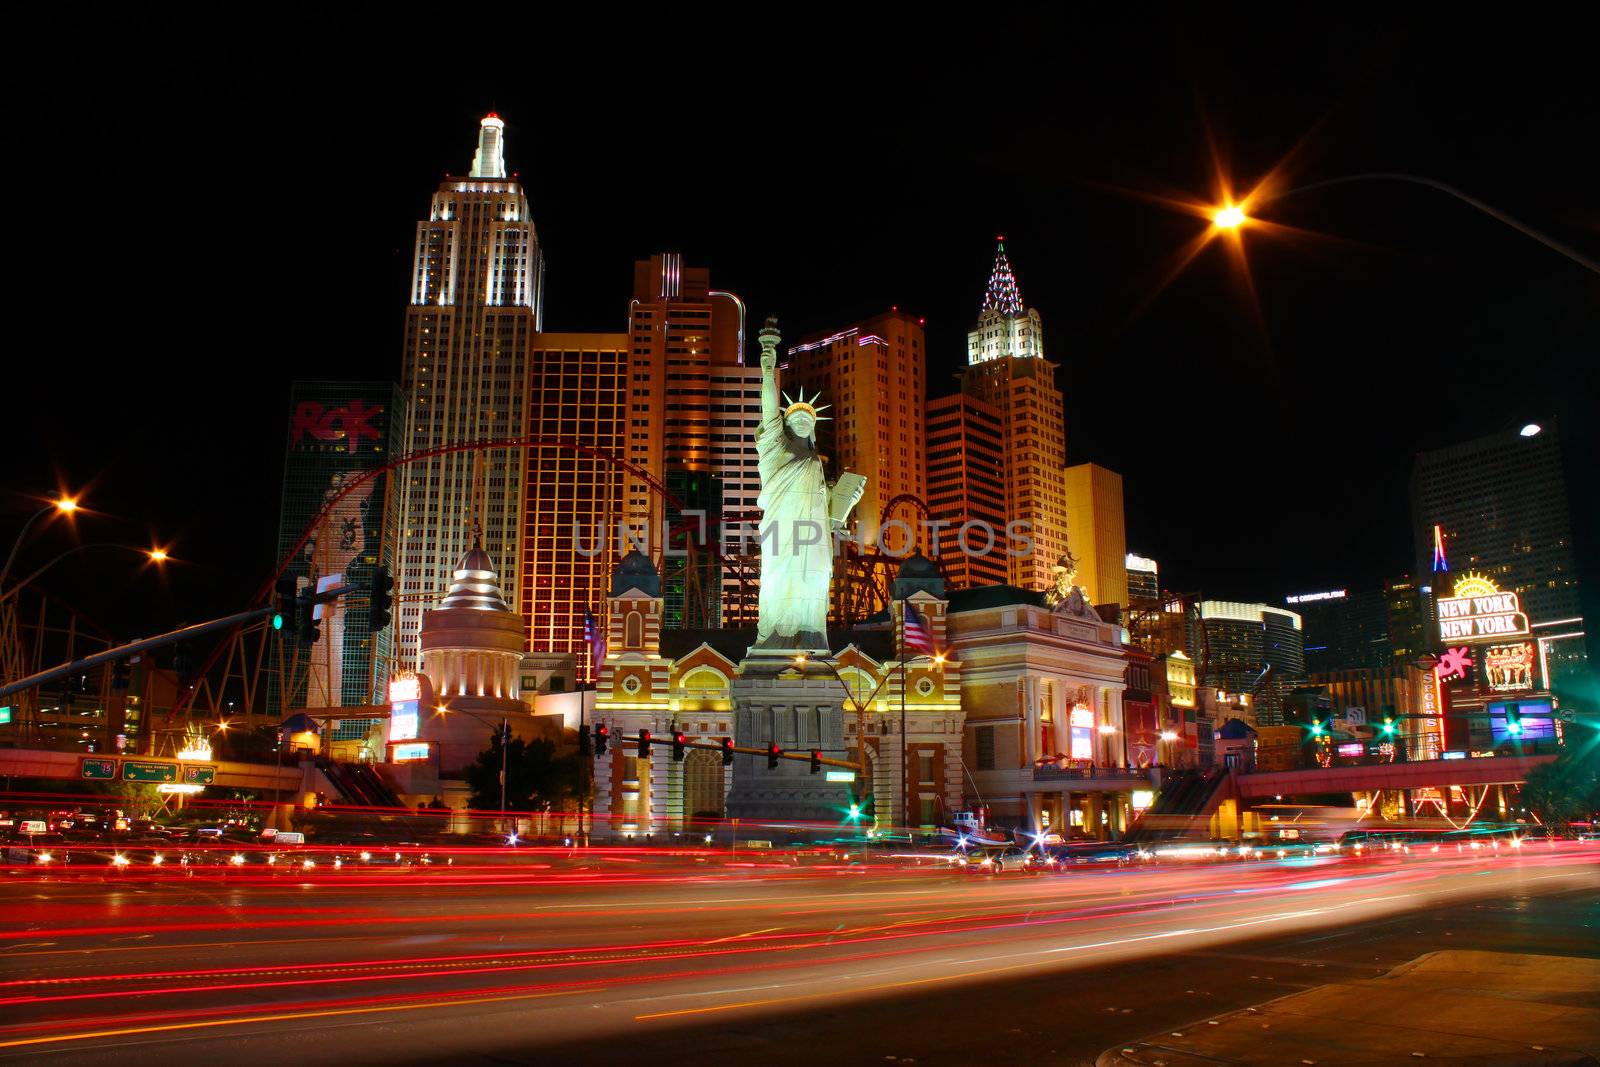 New York New York Hotel Casino by Wirepec